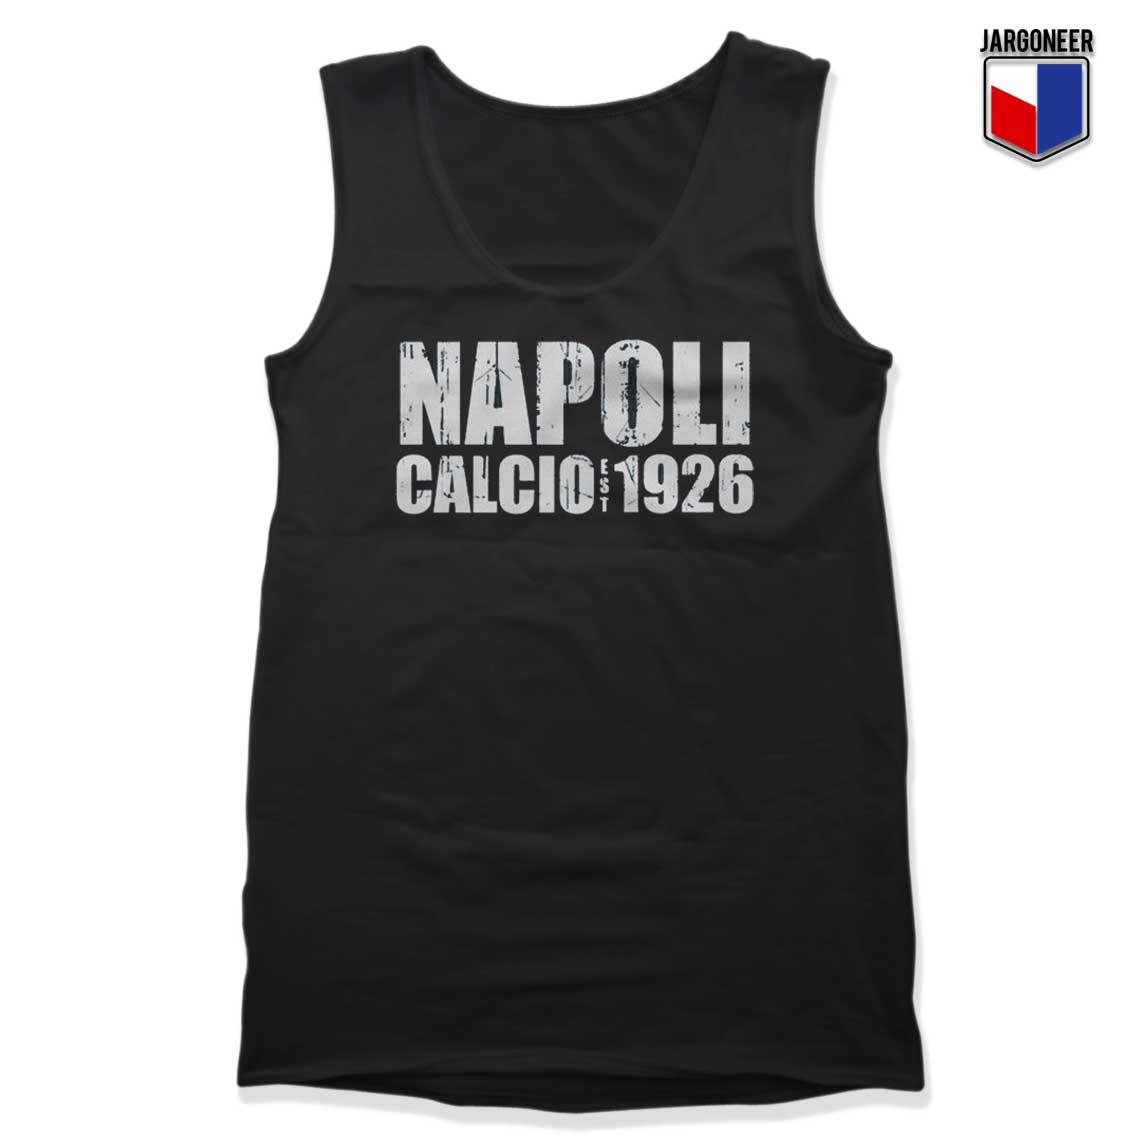 Napoli Calcio Est 1926 Tank Top - Shop Unique Graphic Cool Shirt Designs